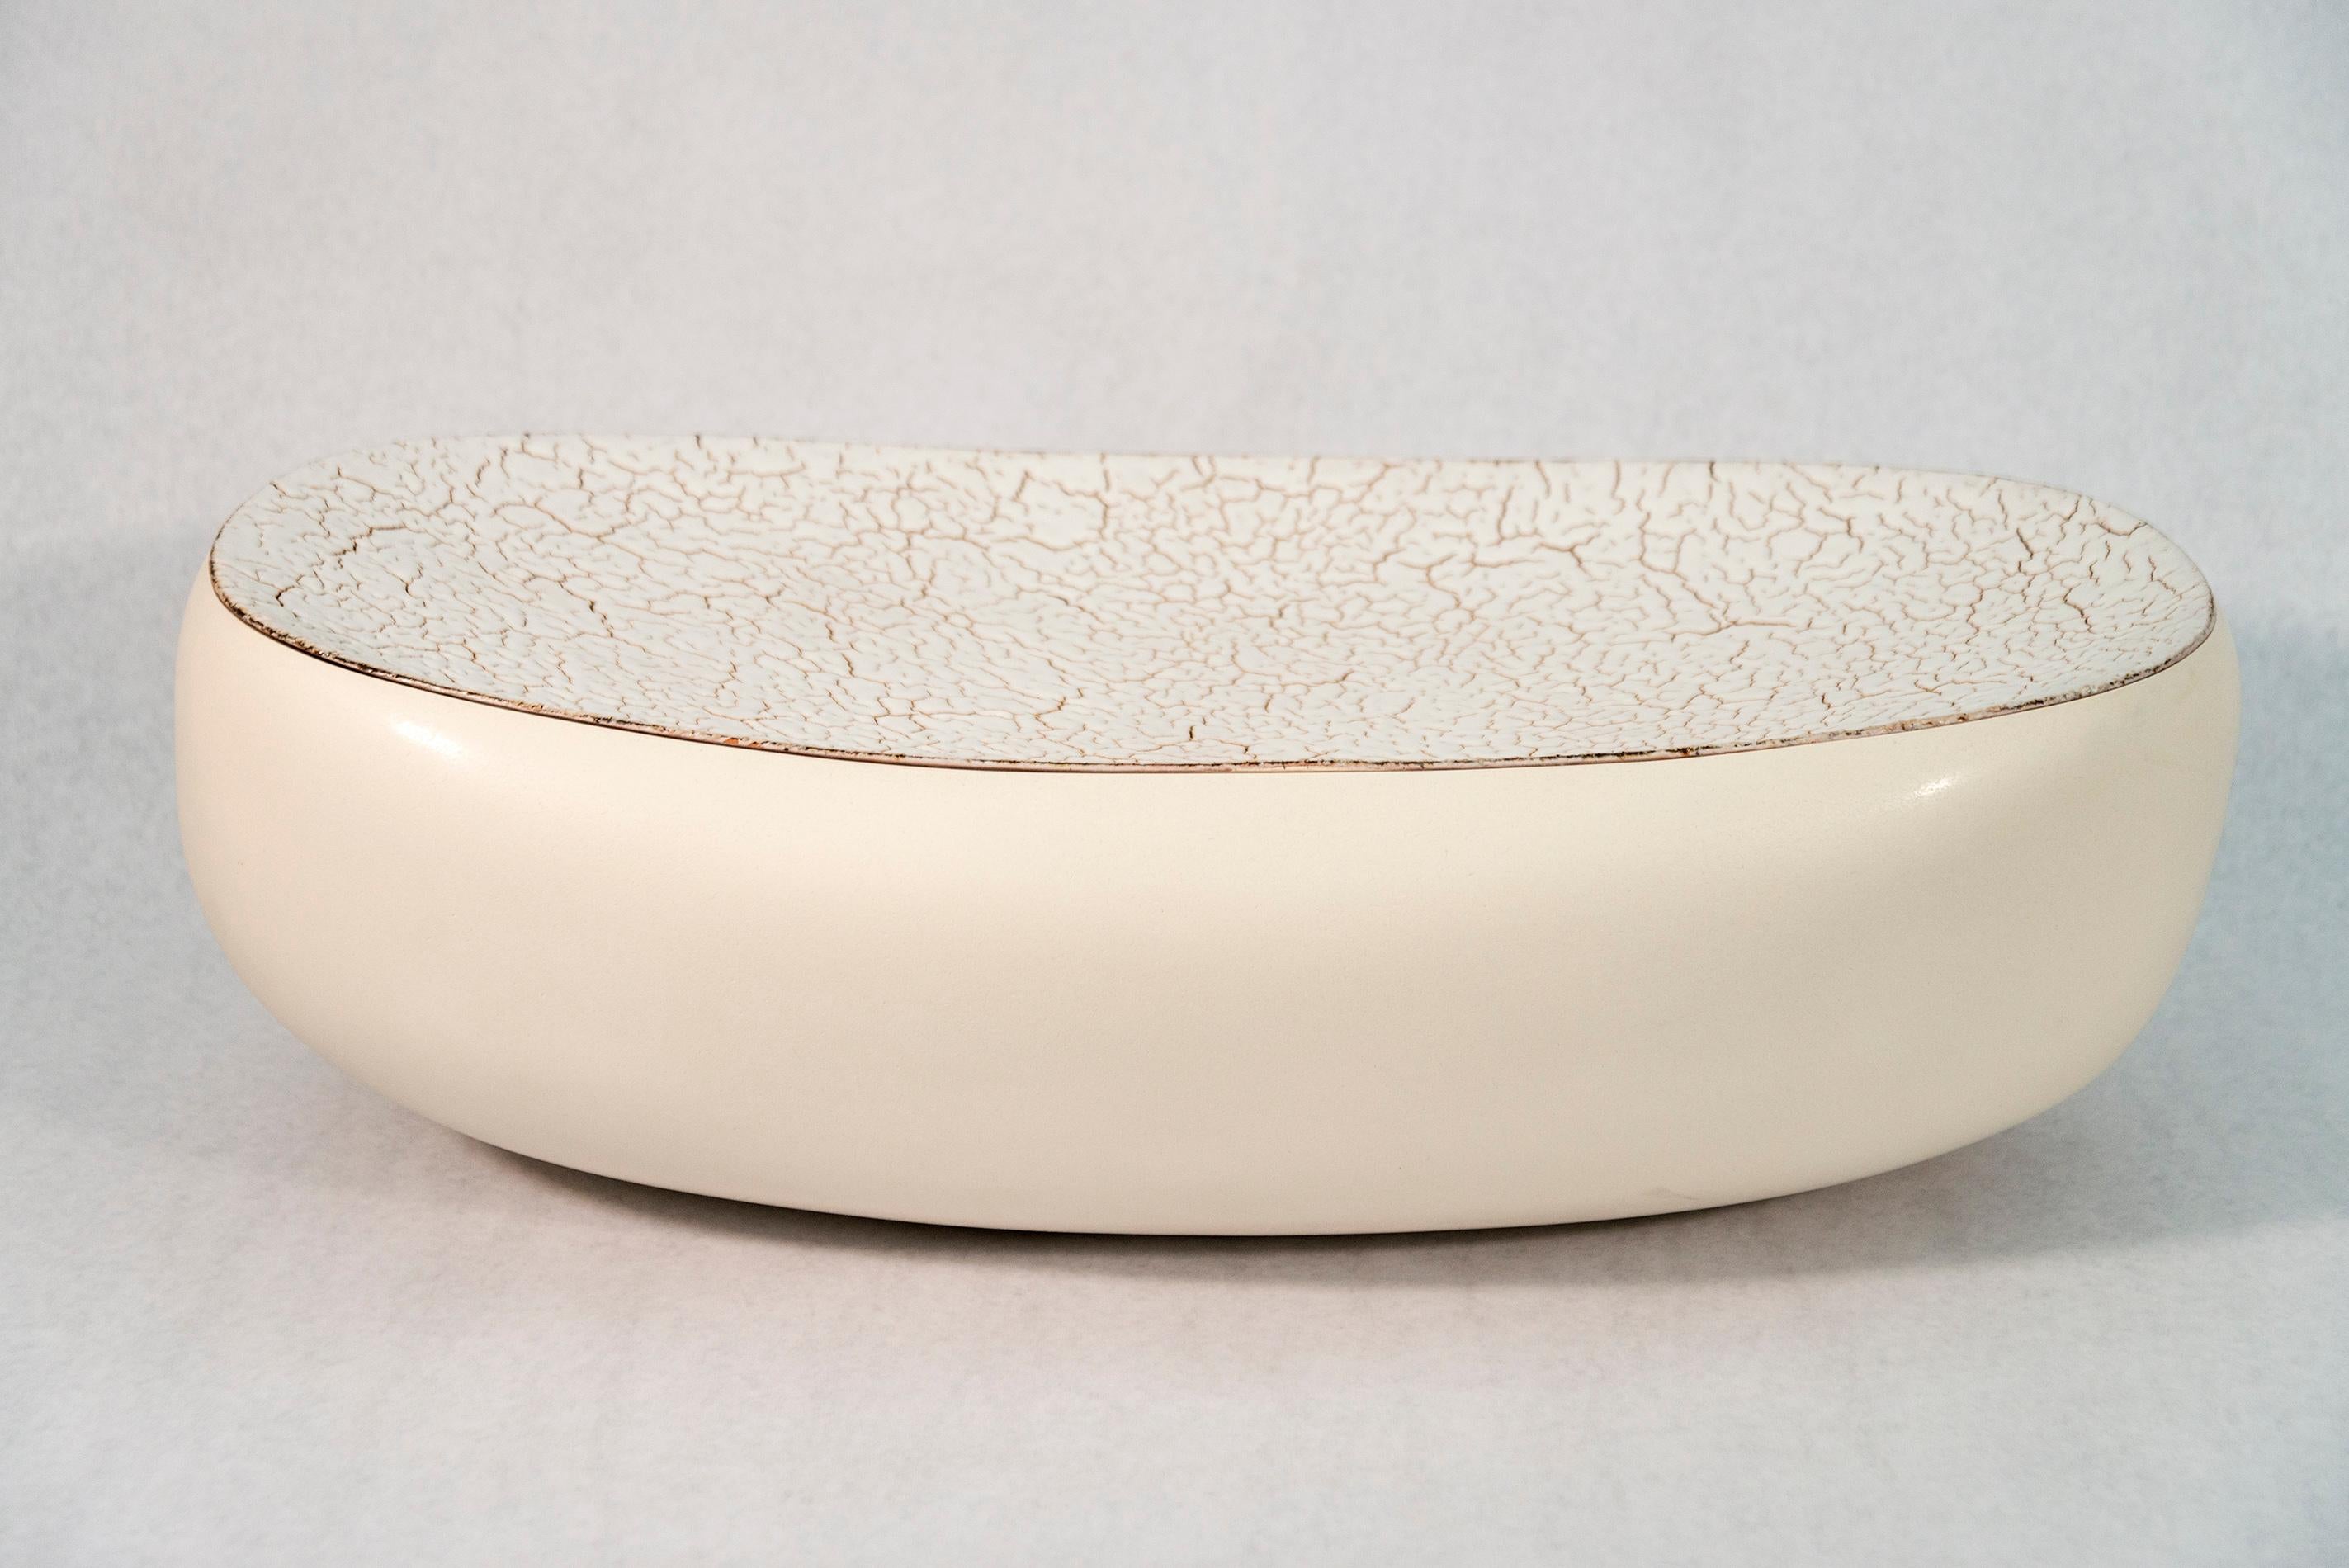 Ellesmere - creamy white, textured, elongated, ceramic art object